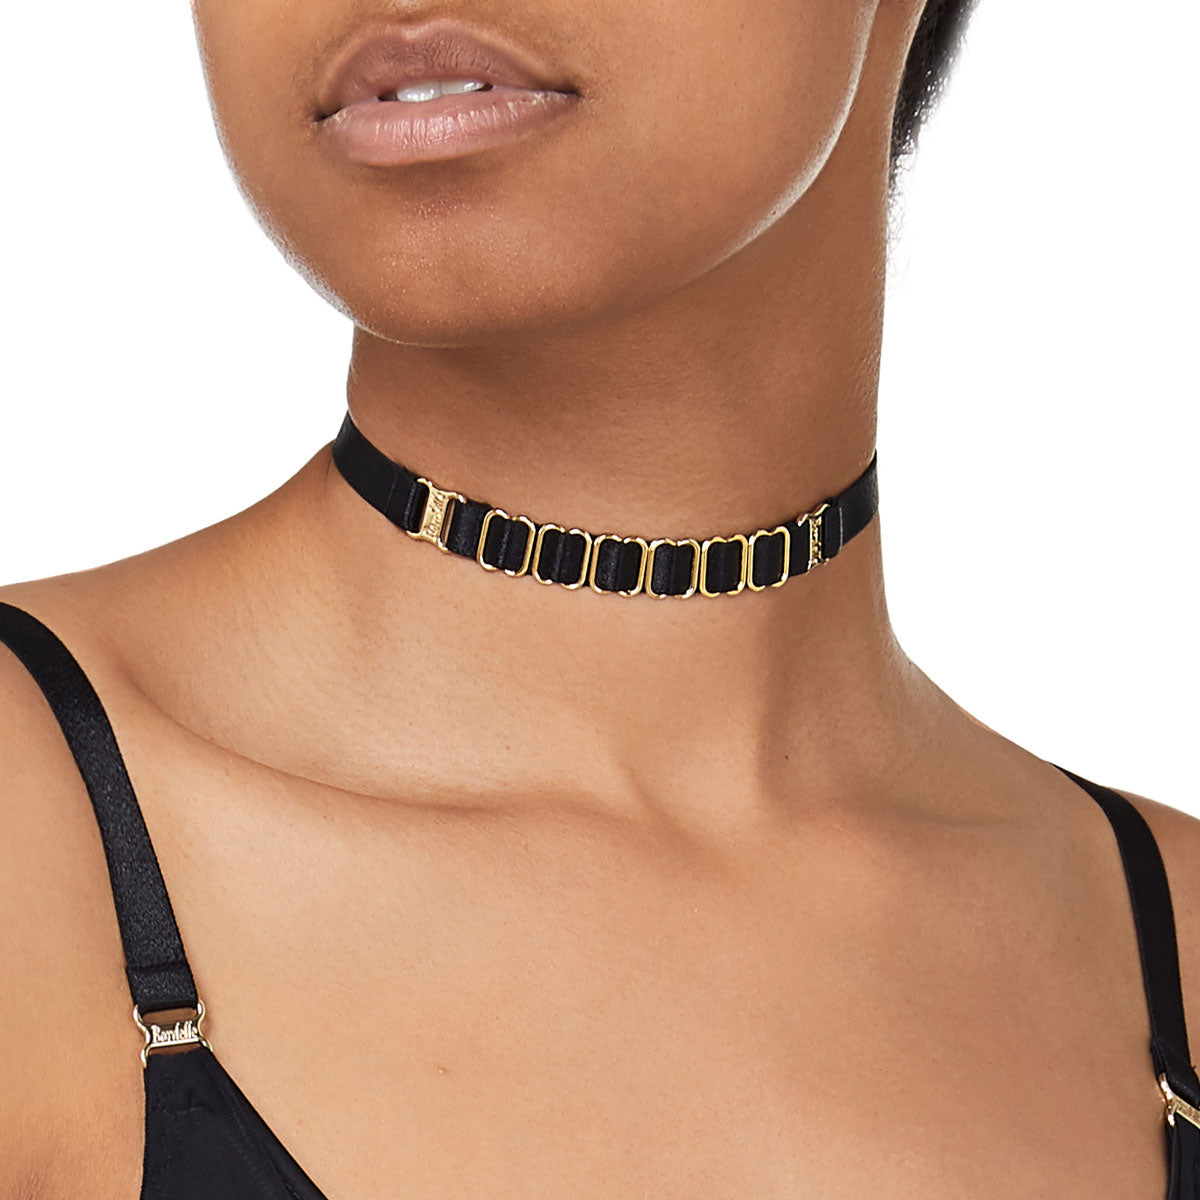 Strap collar by Bordelle - black